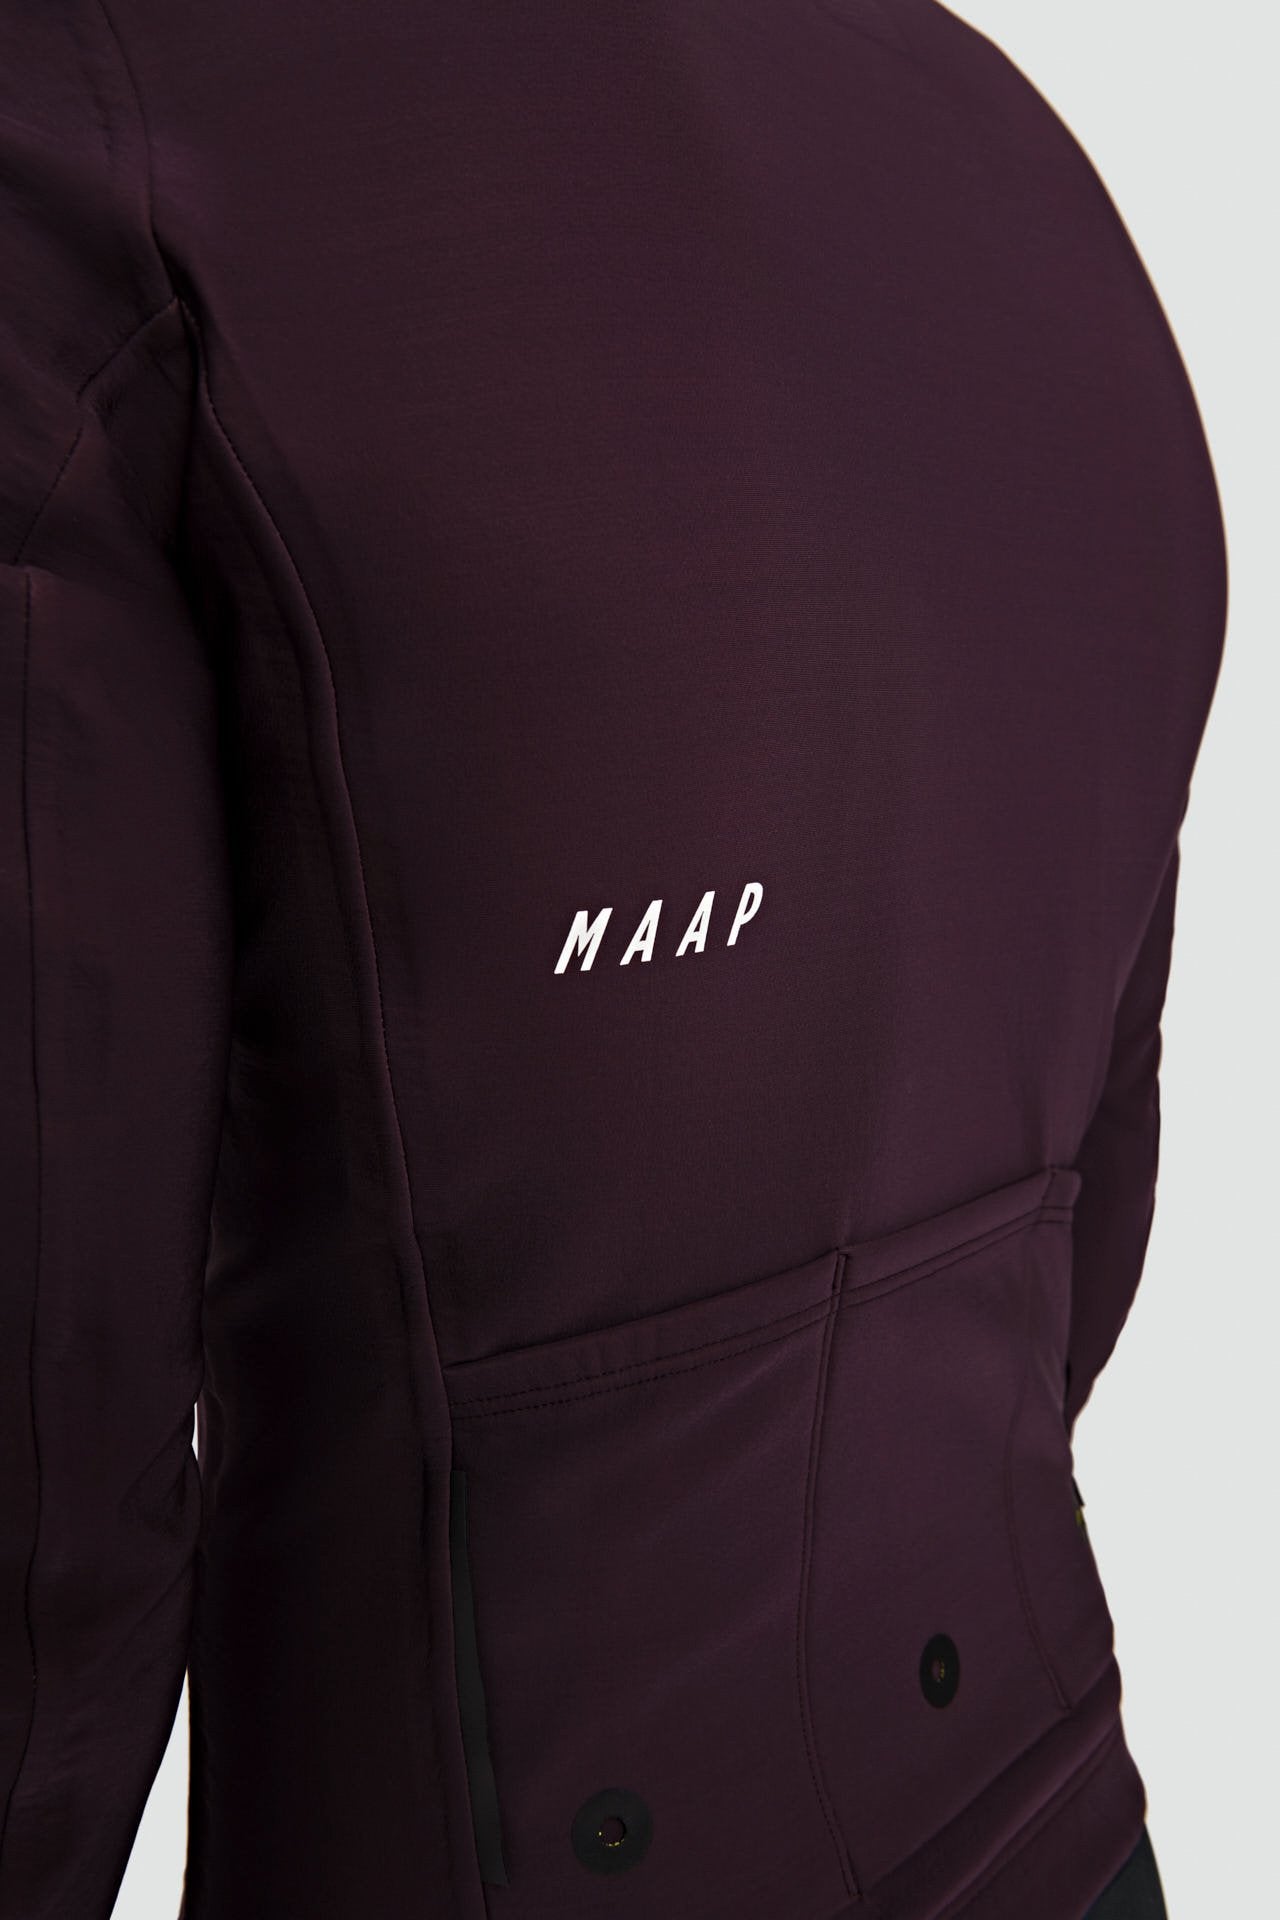 Apex Winter Jacket - MAAP Cycling Apparel